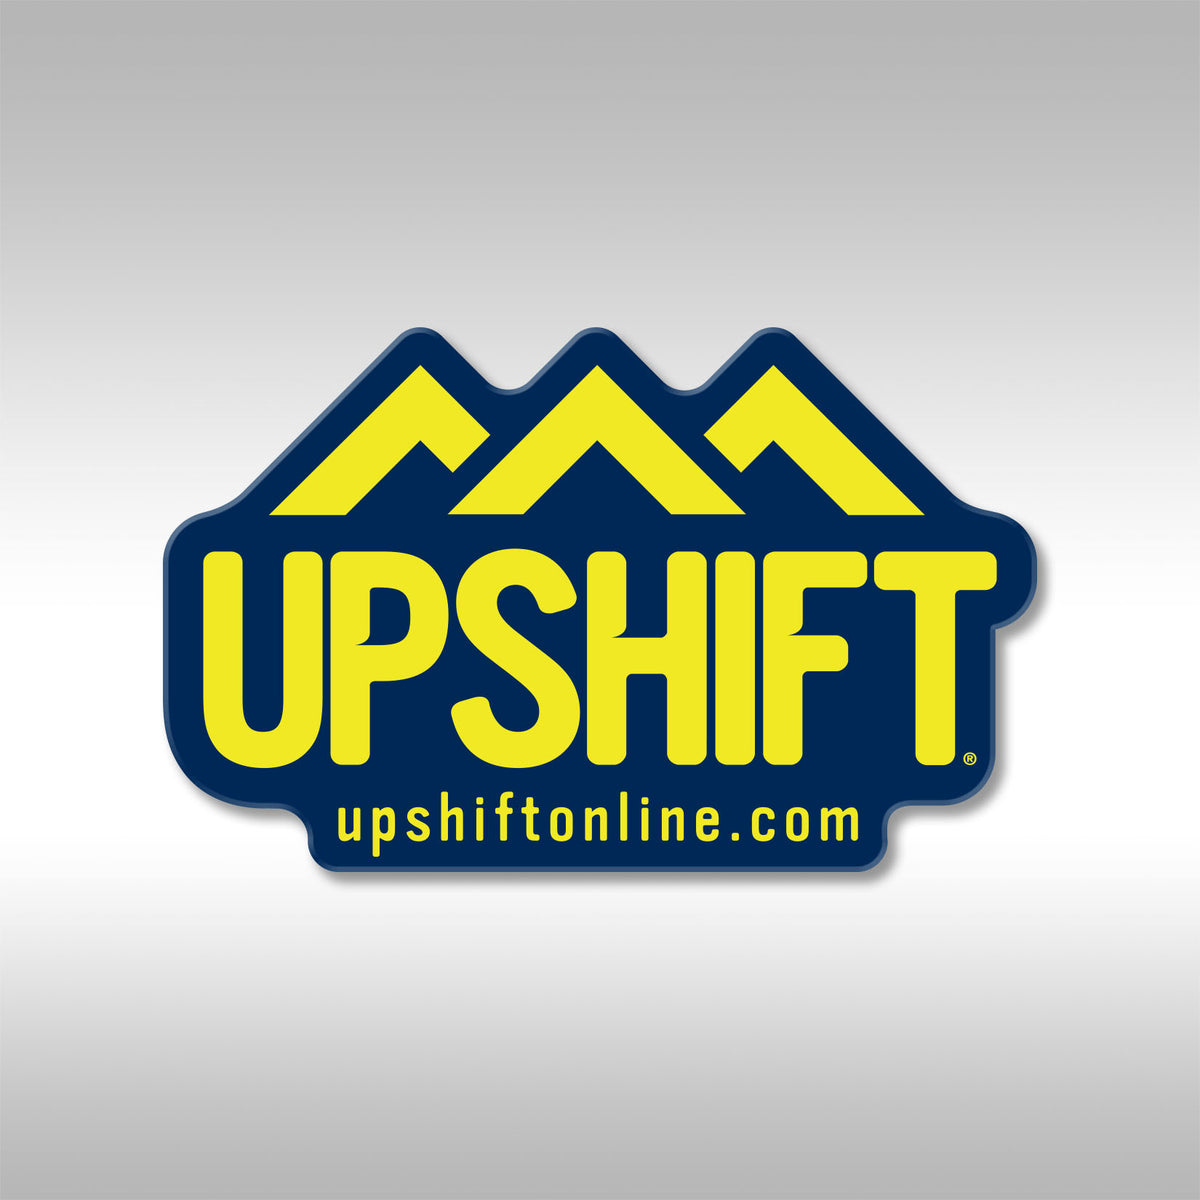 Upshift Logo Stickers - Heavy Duty